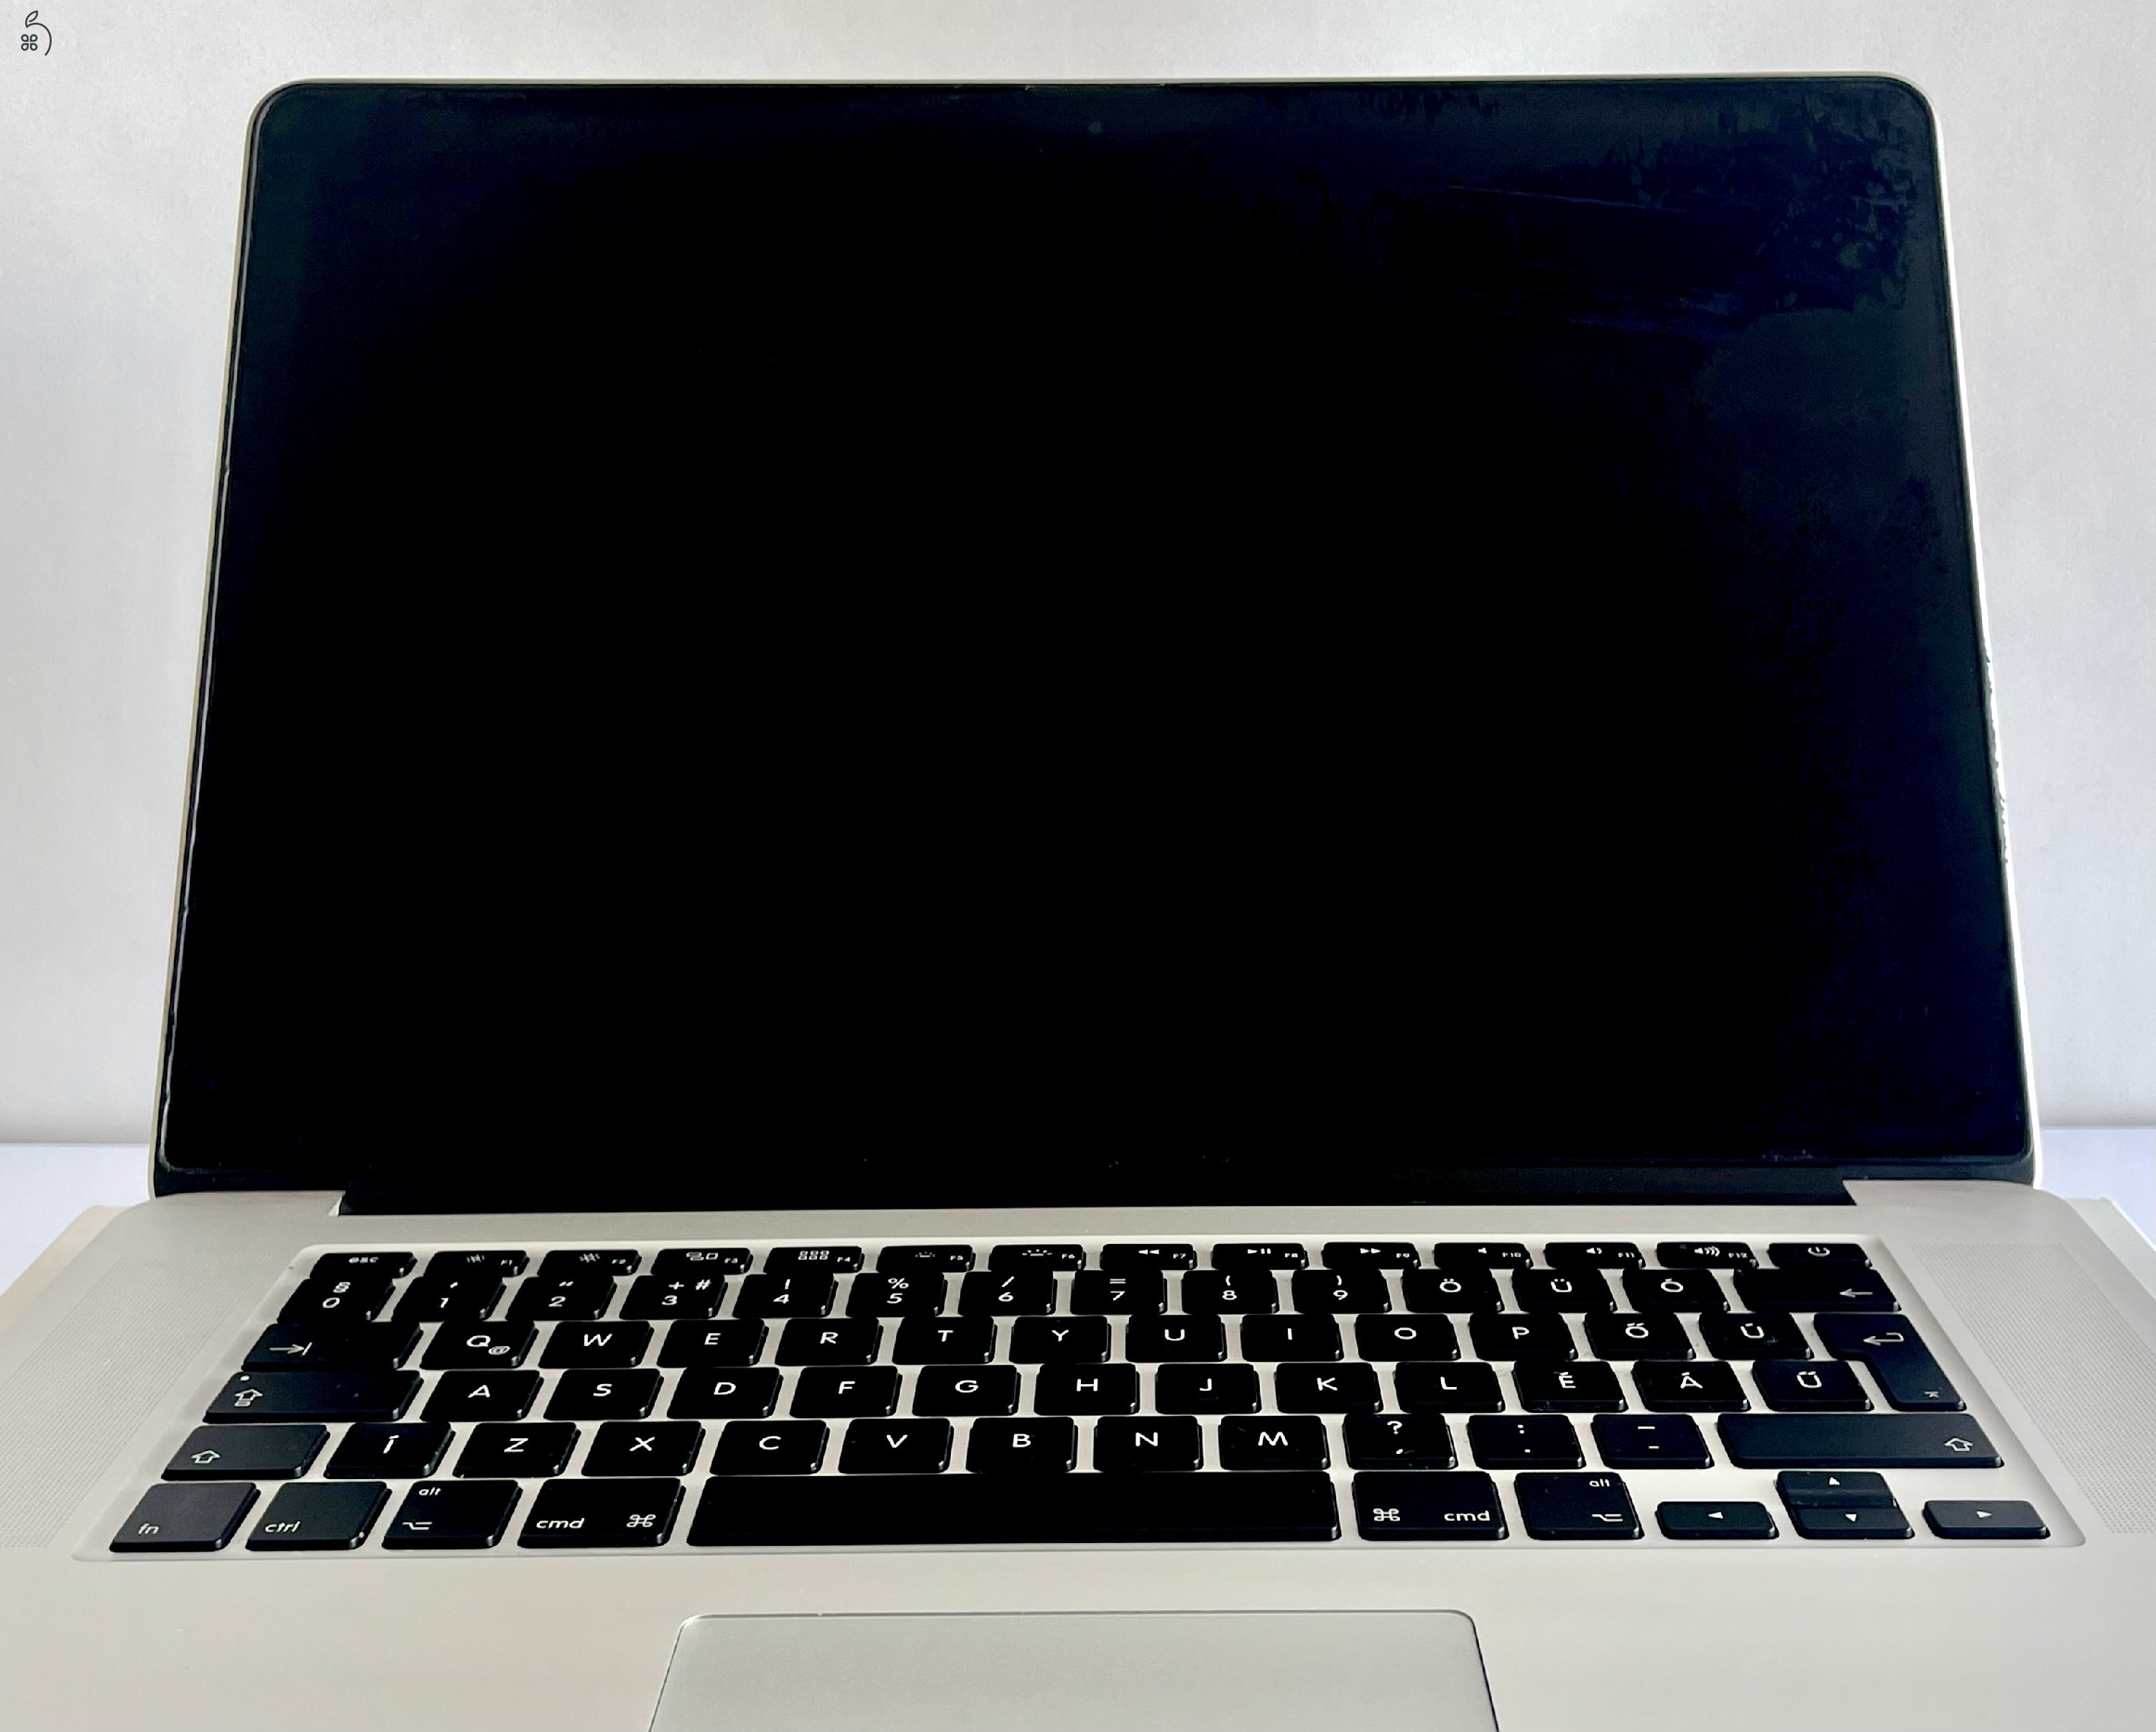 Macbook Pro 15” 2014 MID, 2,5 Ghz Intelcore i7, 512 Gb SSD, 16 Gb DDR3 RAM